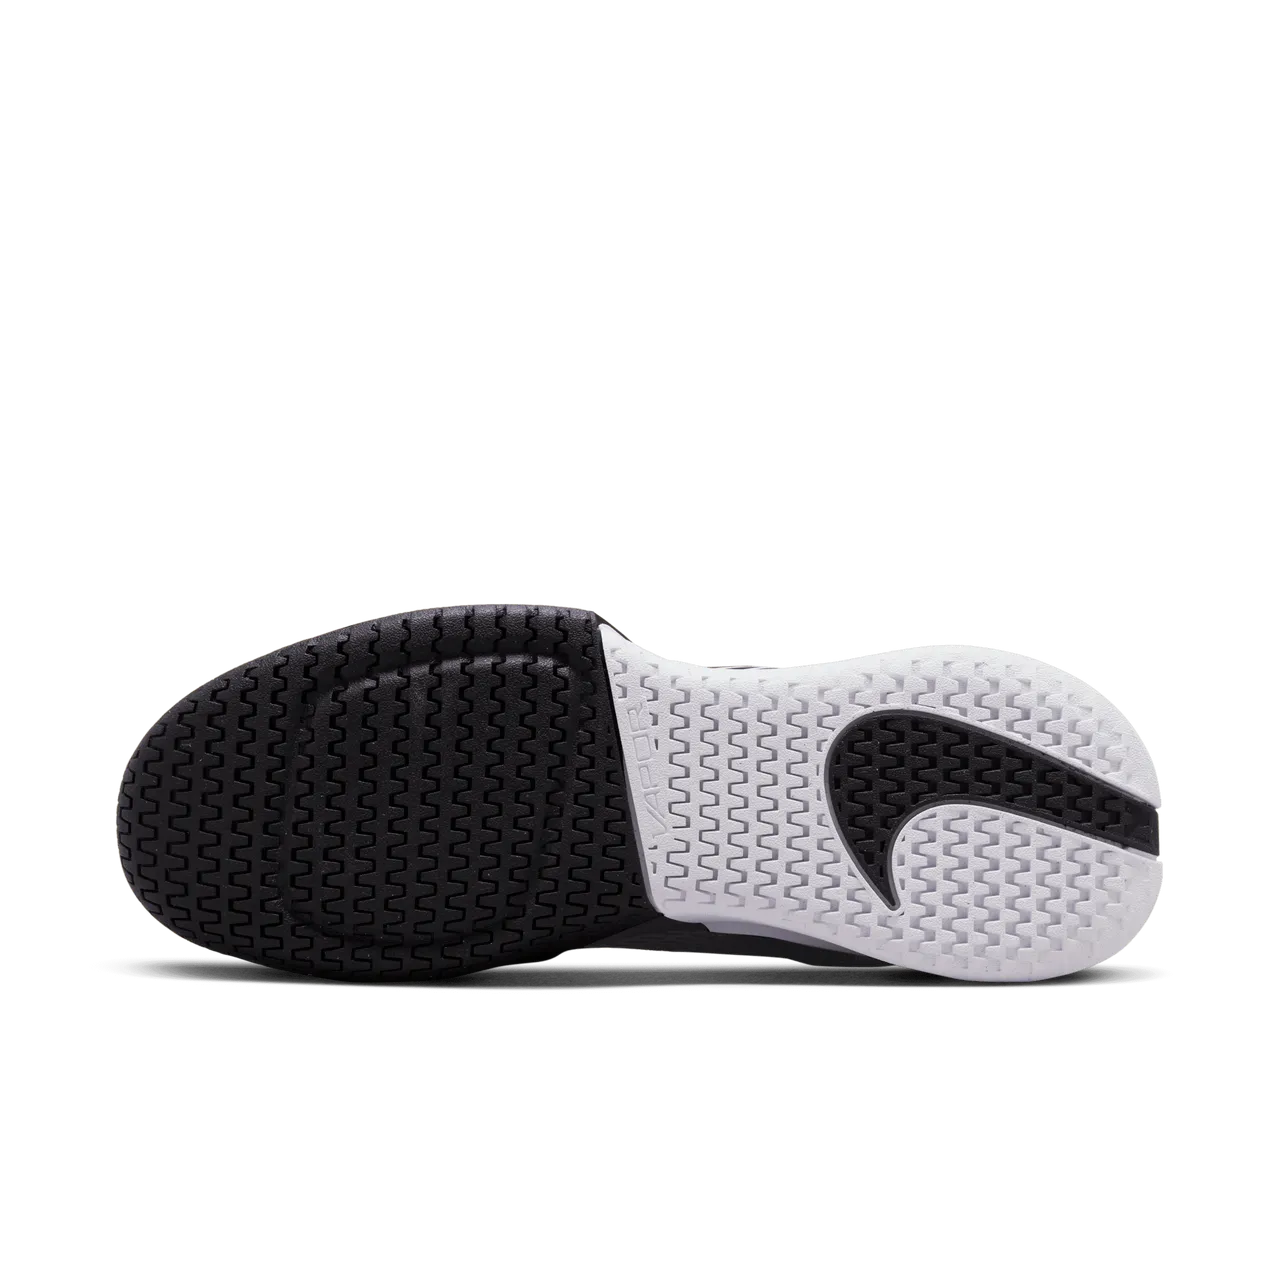 NikeCourt Air Zoom Vapor Pro 2 Women's Hard Court Tennis Shoes - Black